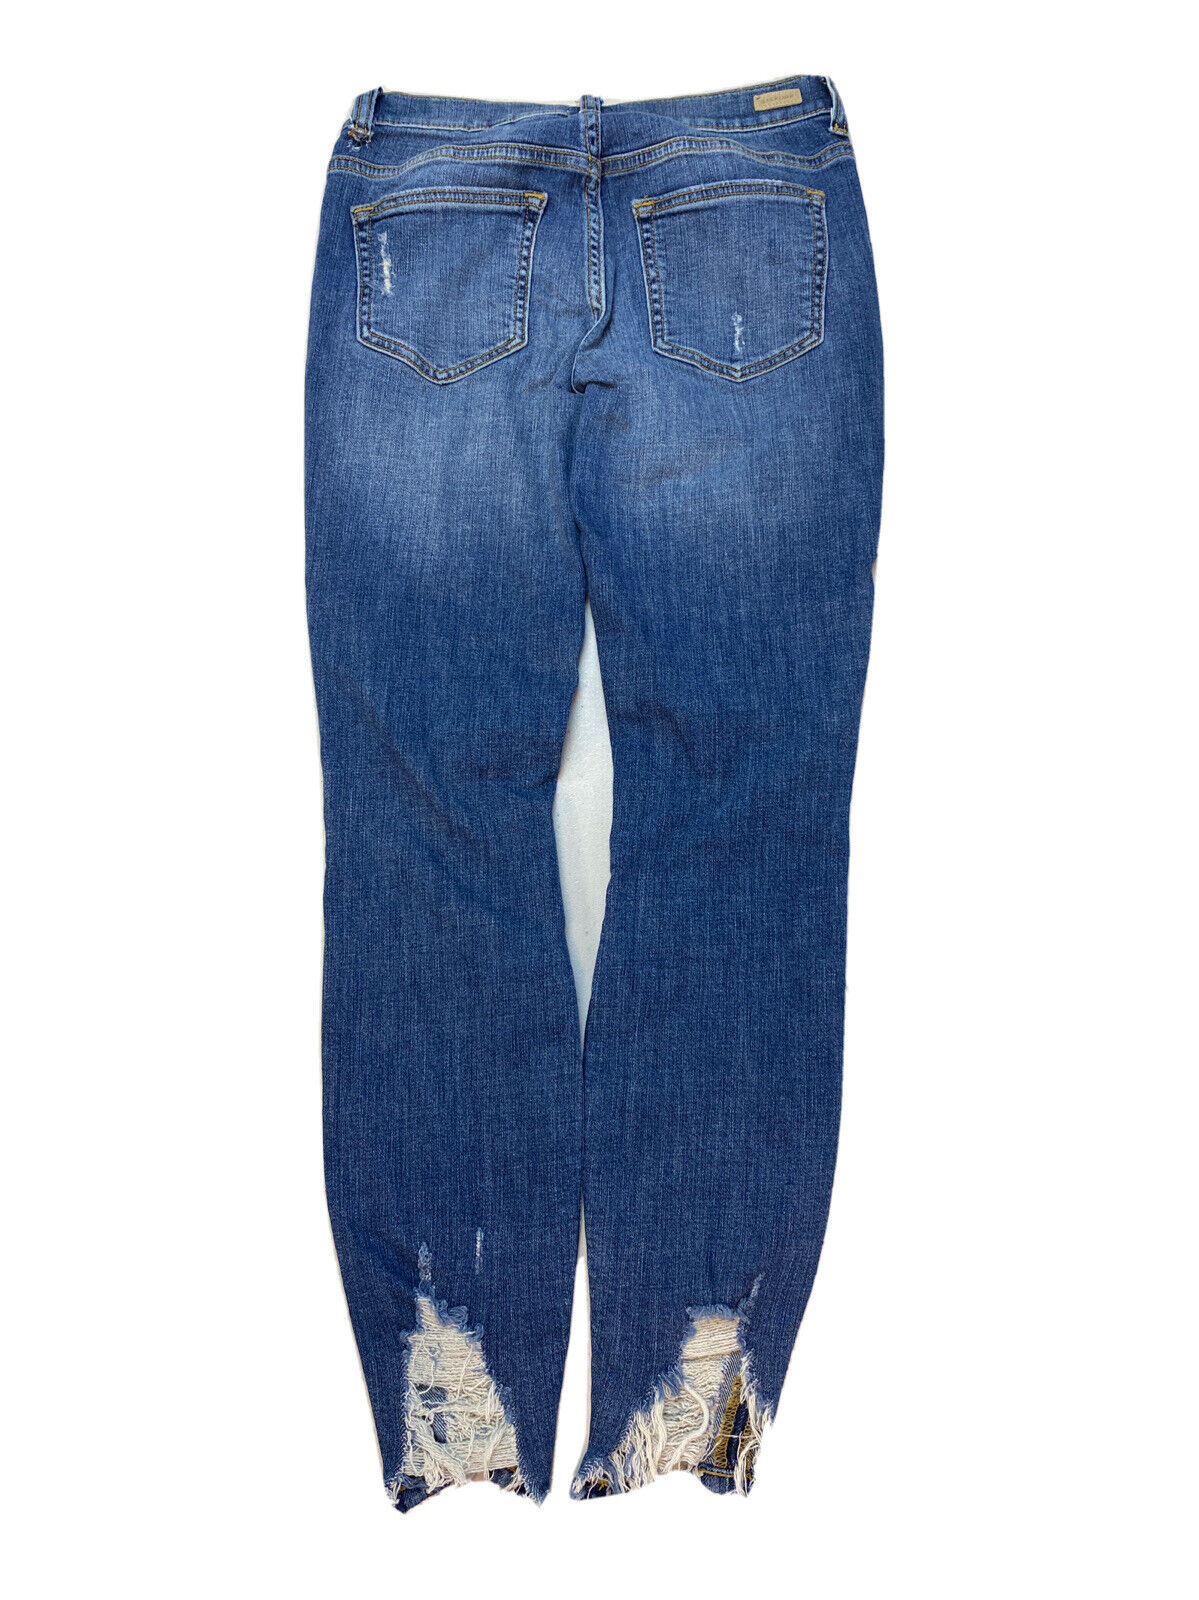 Sneak Peak Women's Medium Wash Distressed Mid Rise Skinny Jeans Sz 3